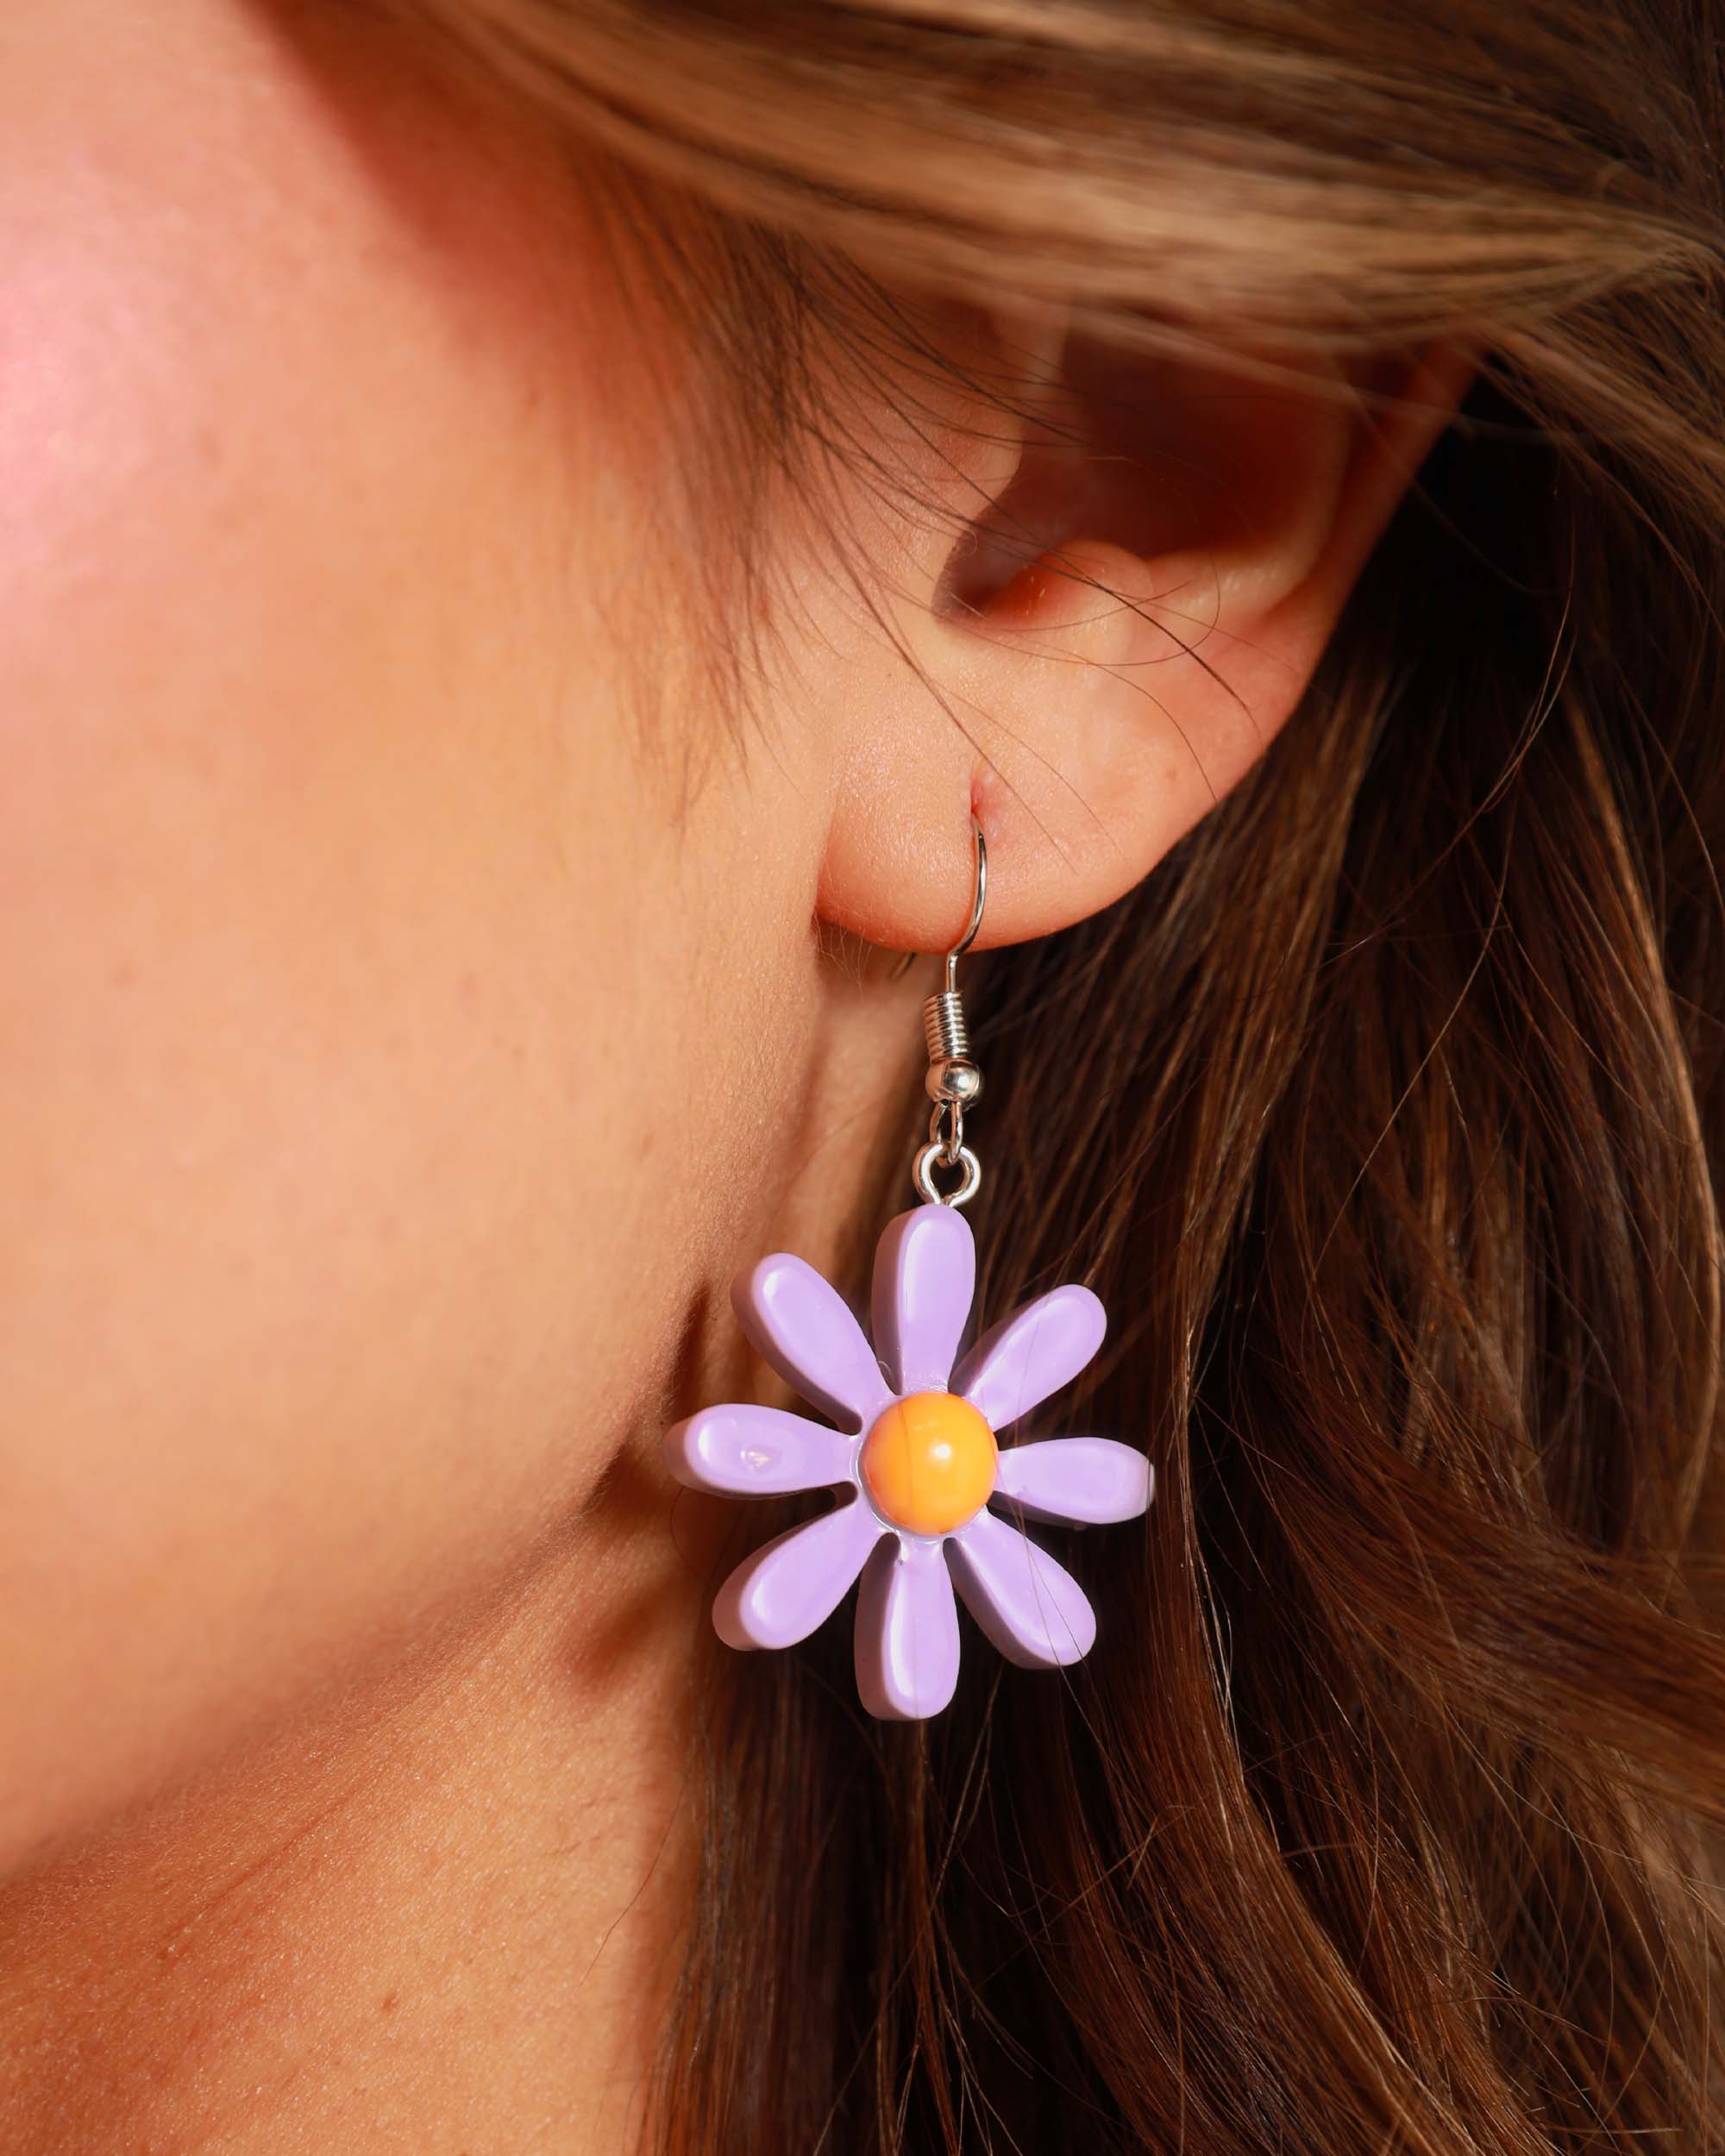 Ear ring | Jewelry design earrings, Gold earrings designs, Antique jewelry  indian